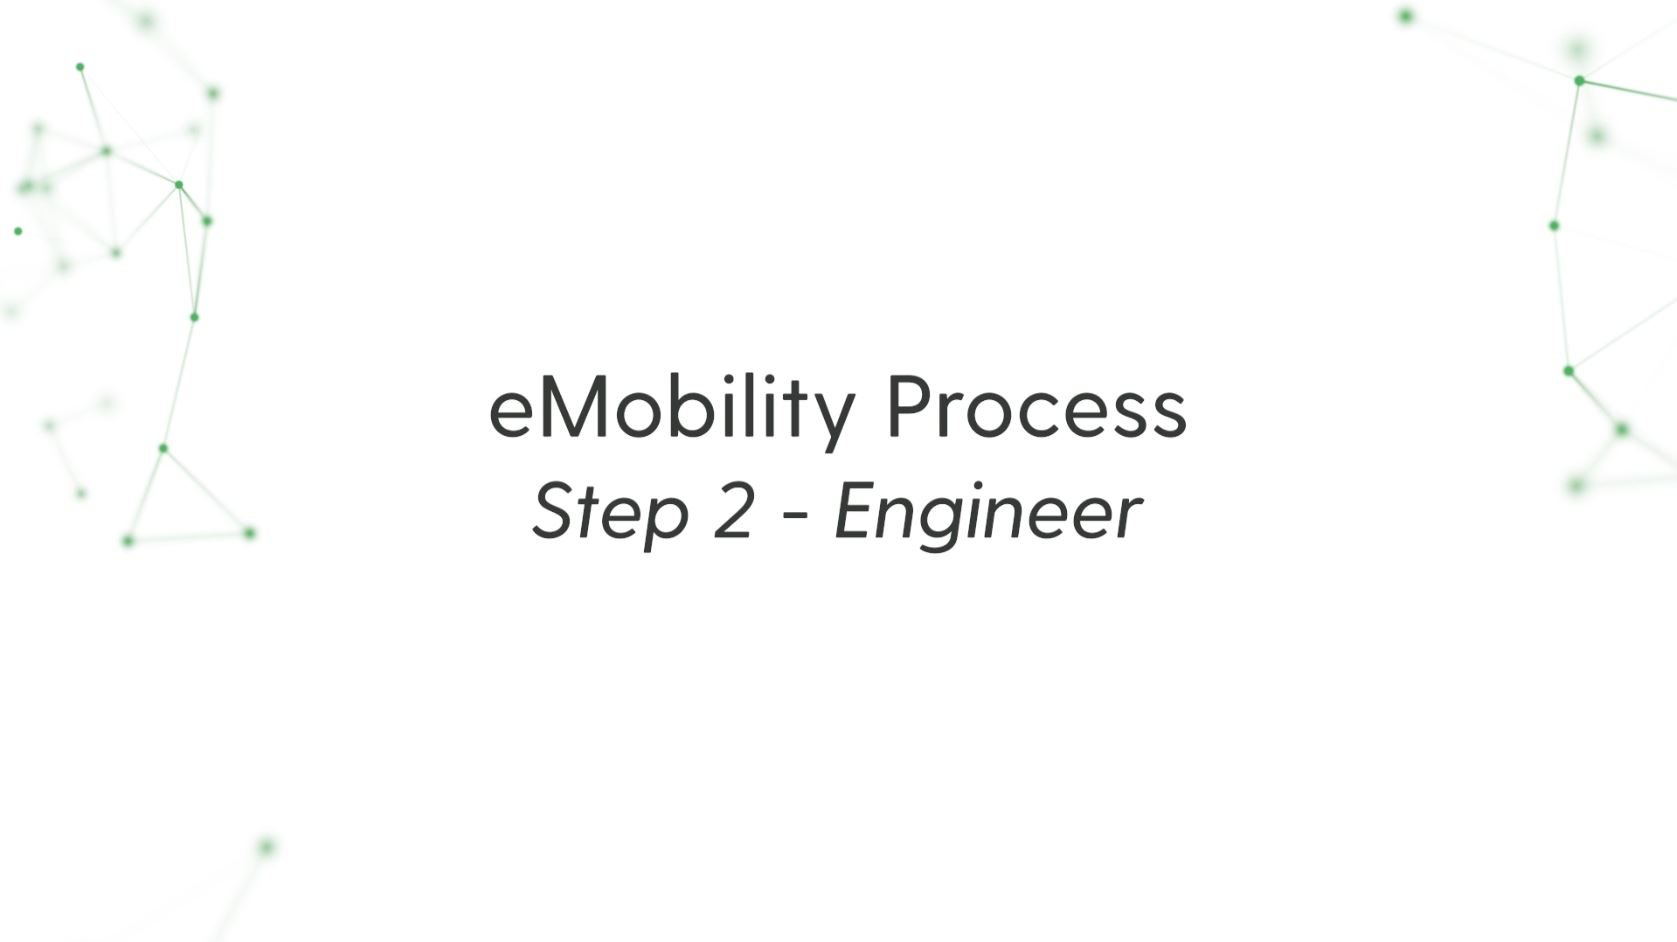 eMobility Step 2: Engineer